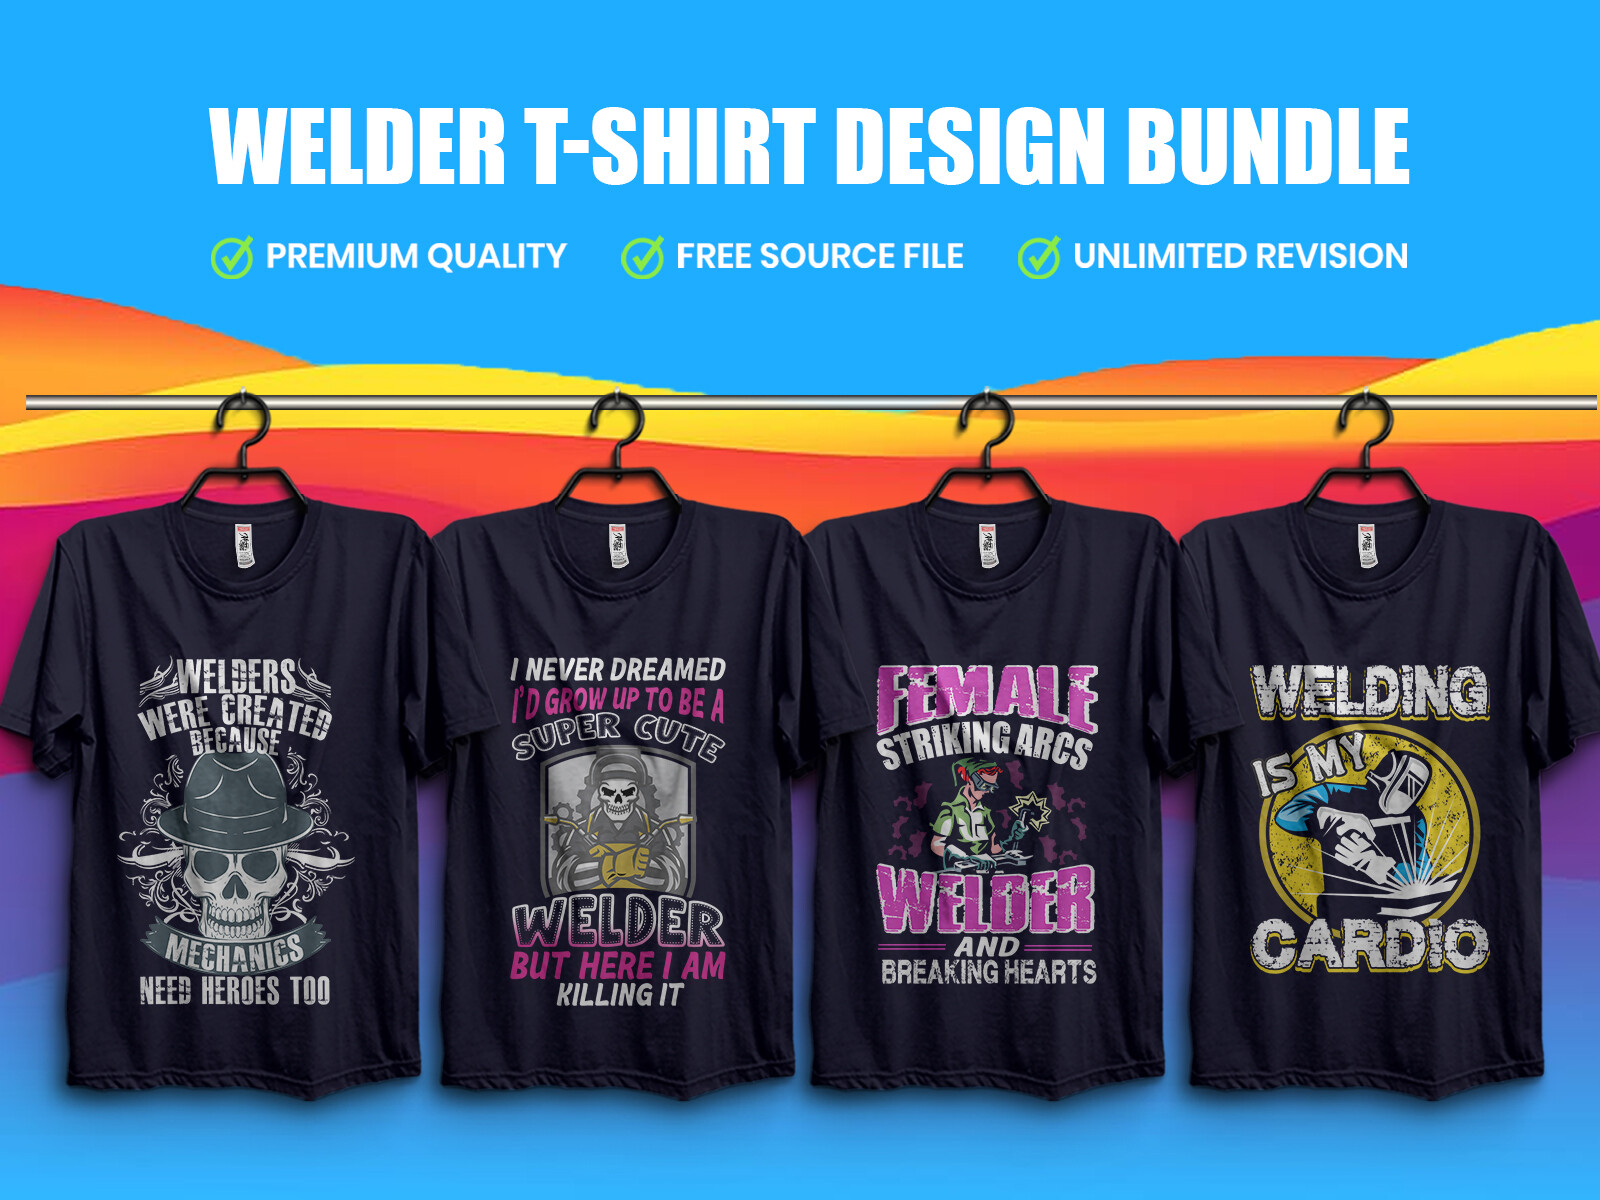 Abedi Islam - Welder T-Shirt Design Bundle